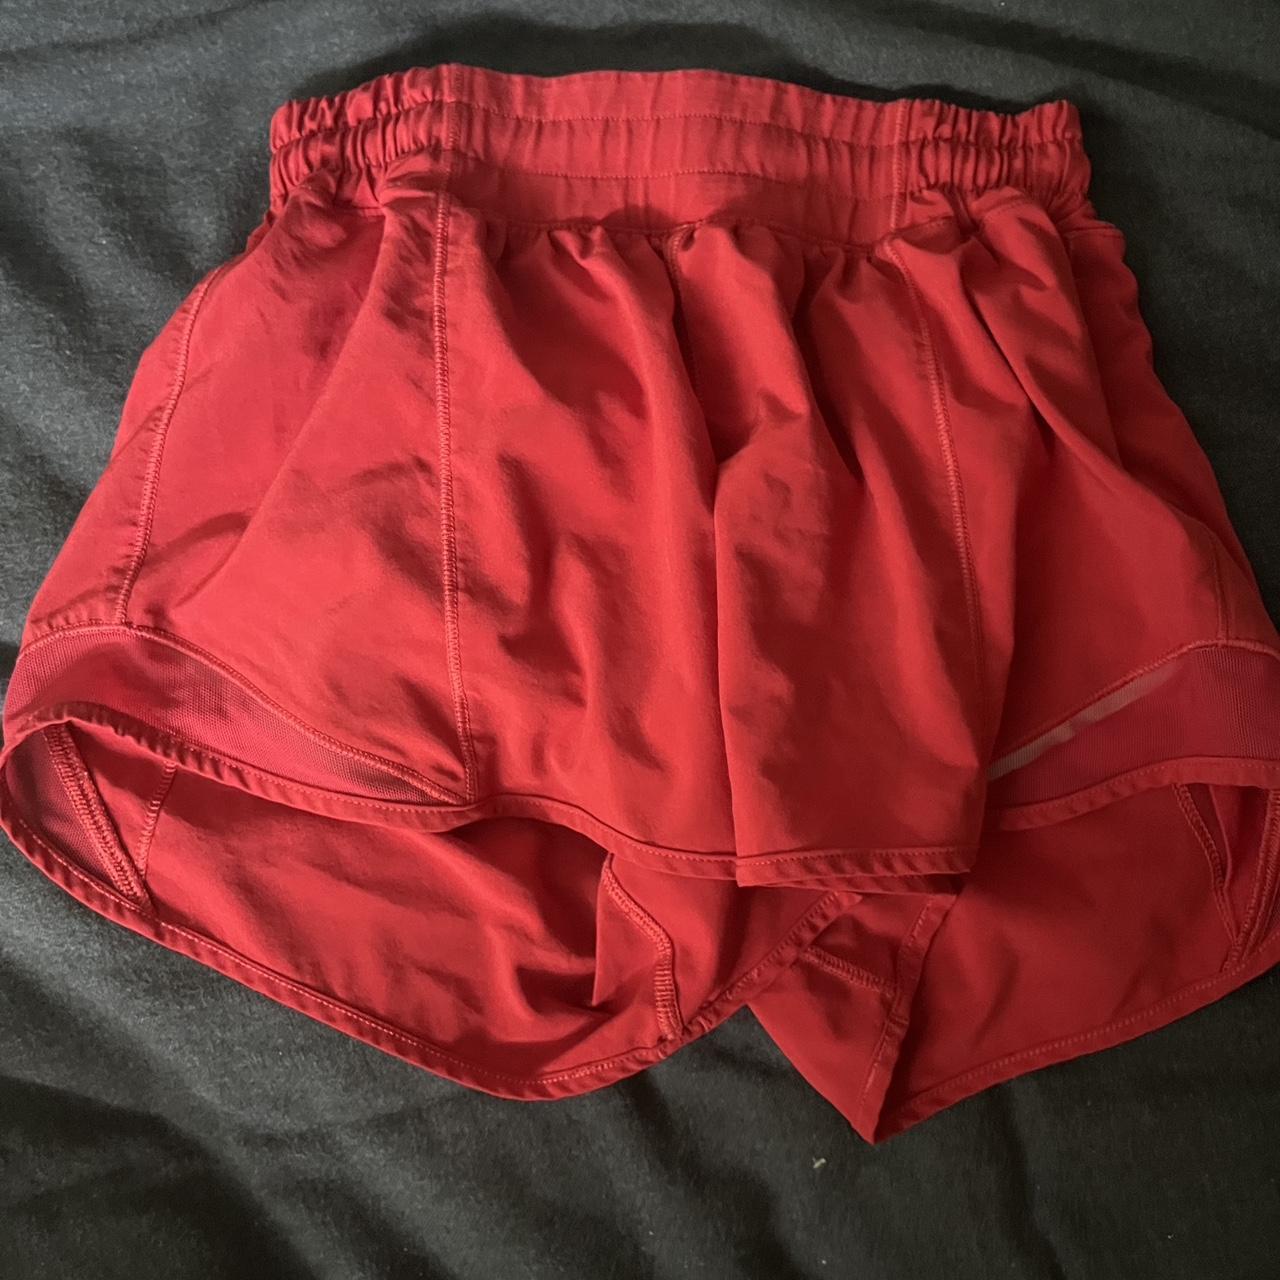 Lululemon Women's Red Shorts